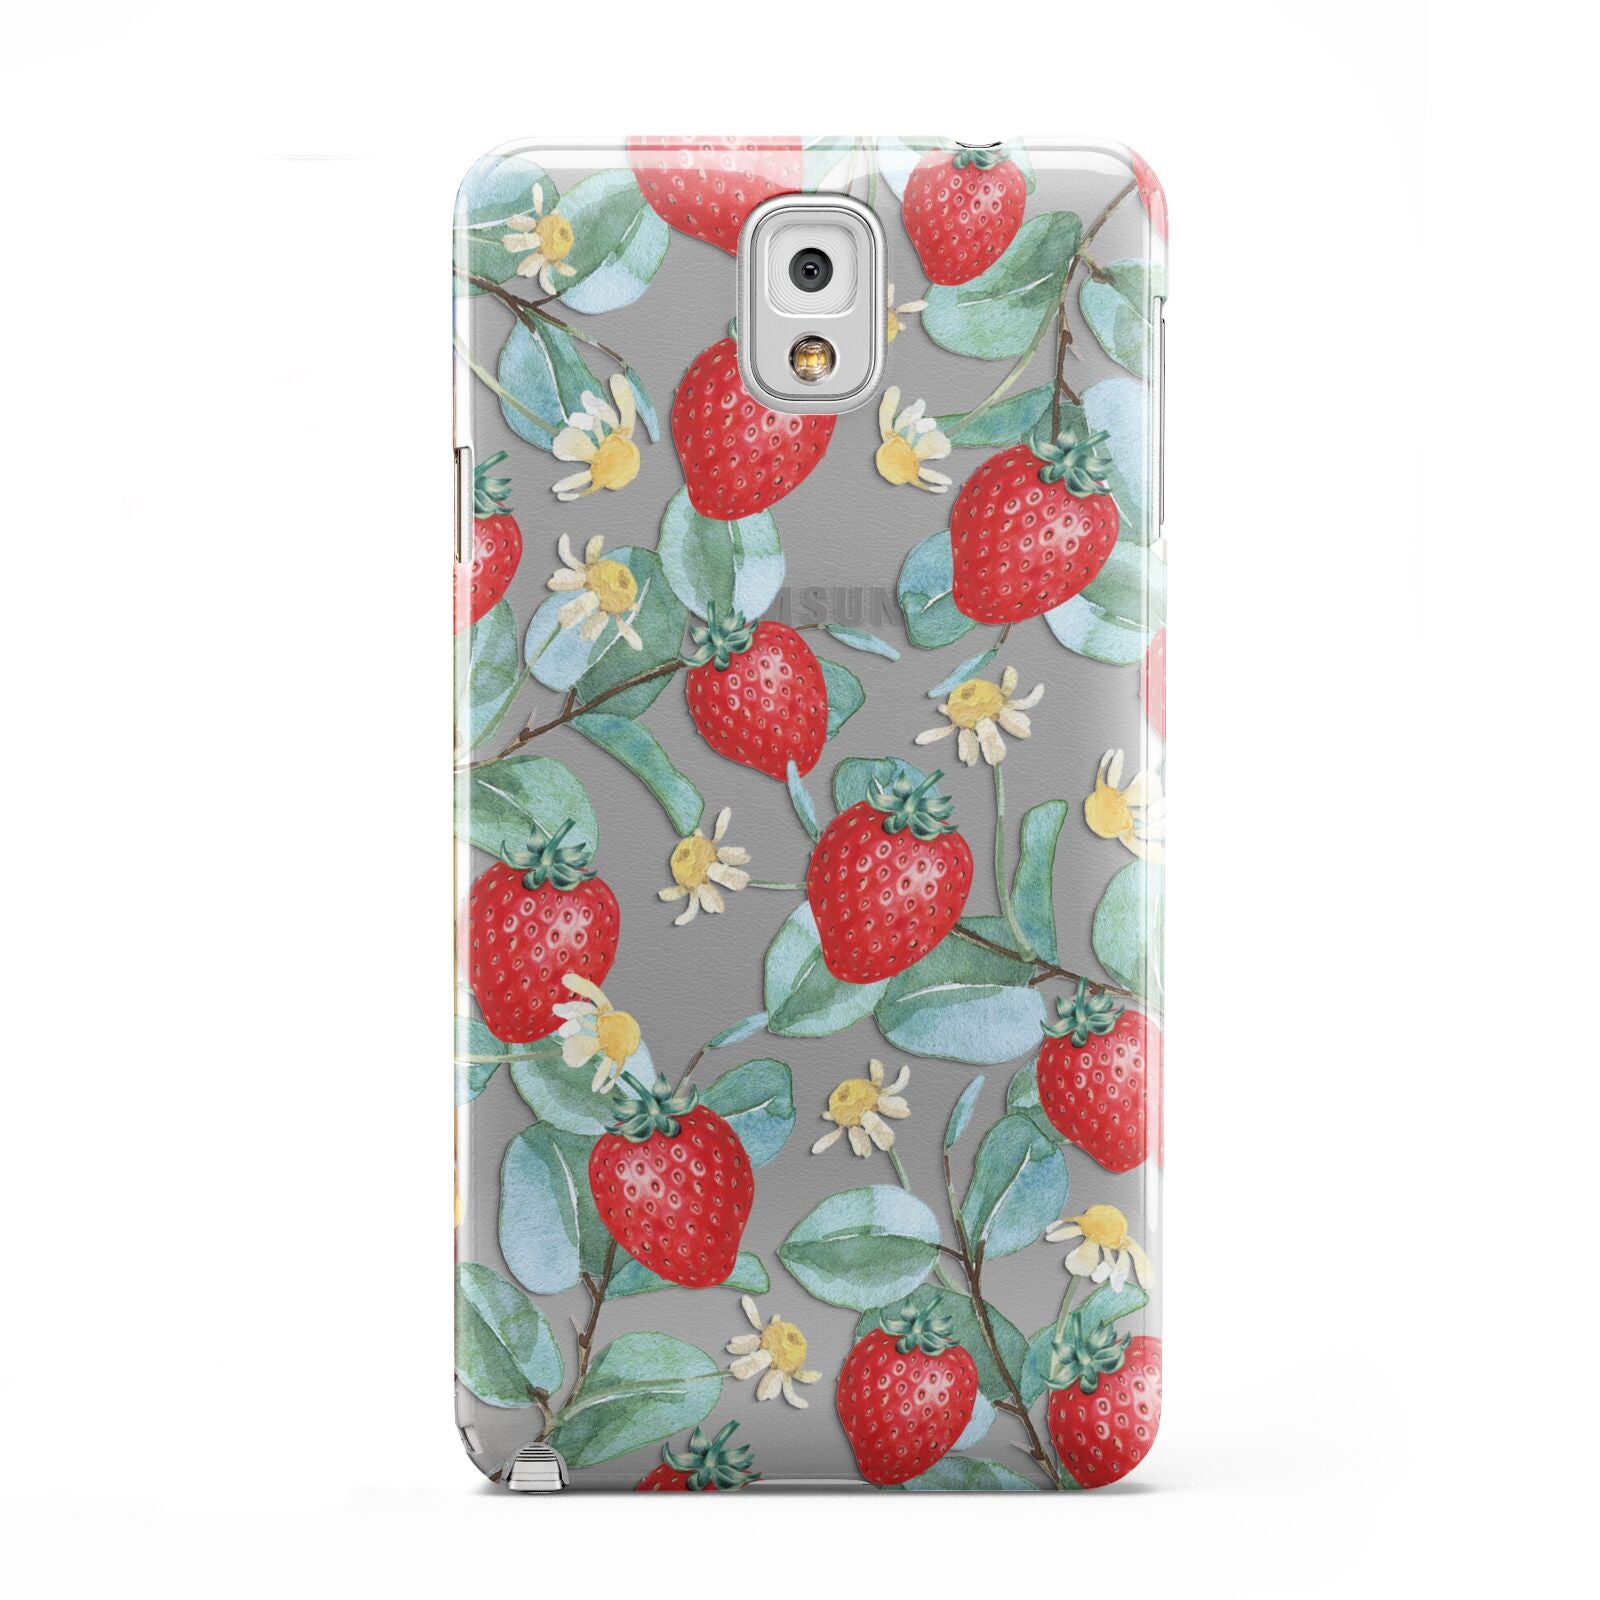 Strawberry Plant Samsung Galaxy Note 3 Case